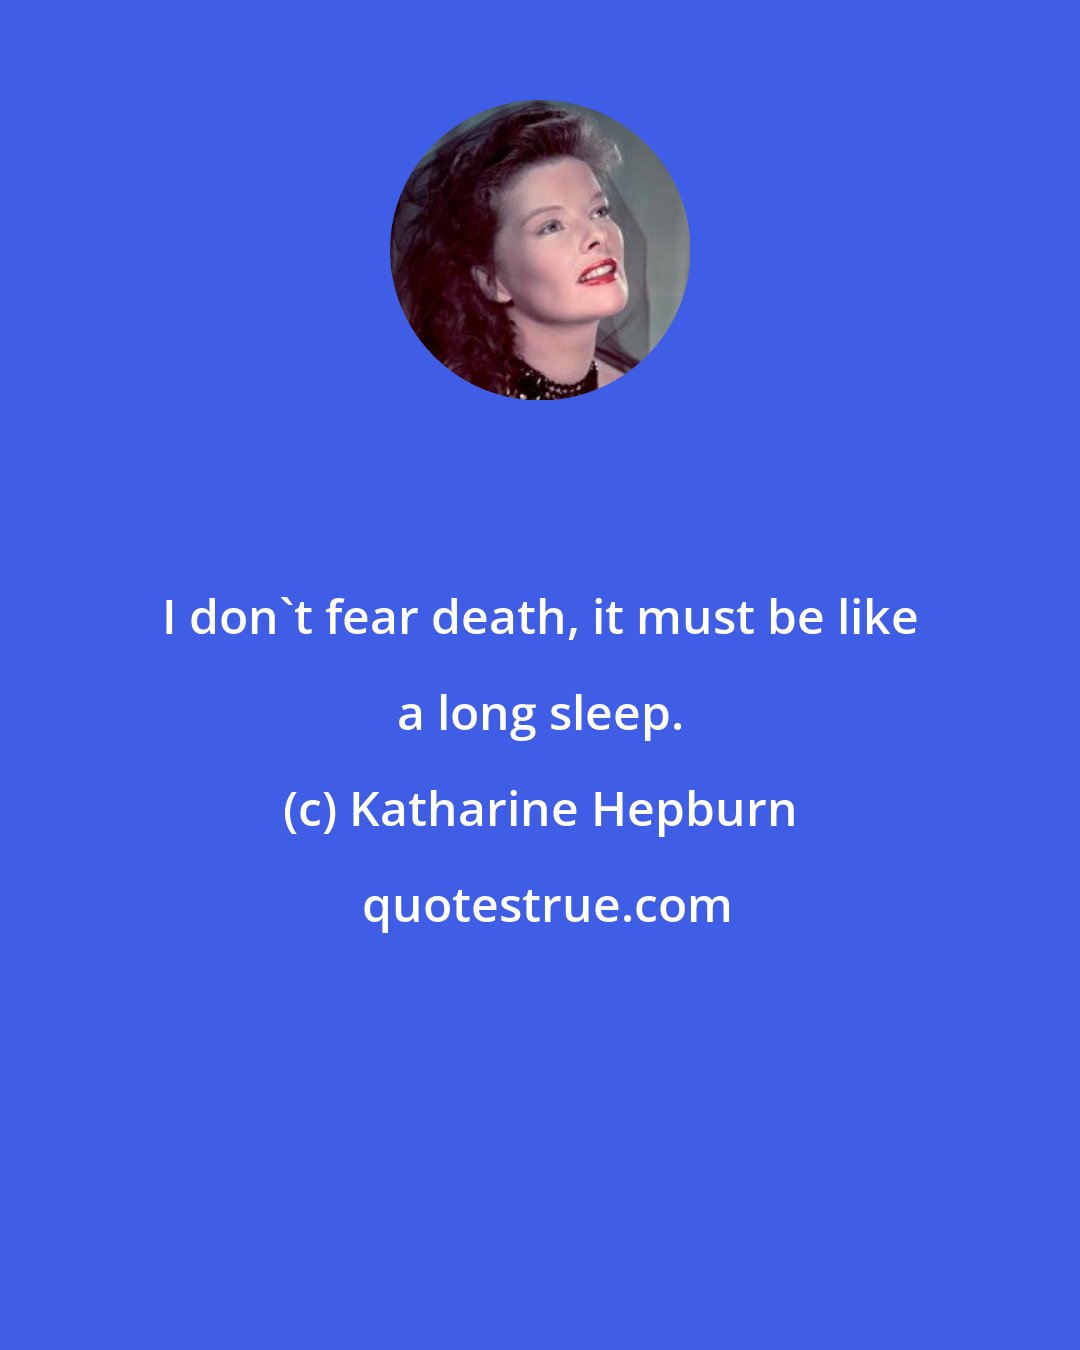 Katharine Hepburn: I don't fear death, it must be like a long sleep.